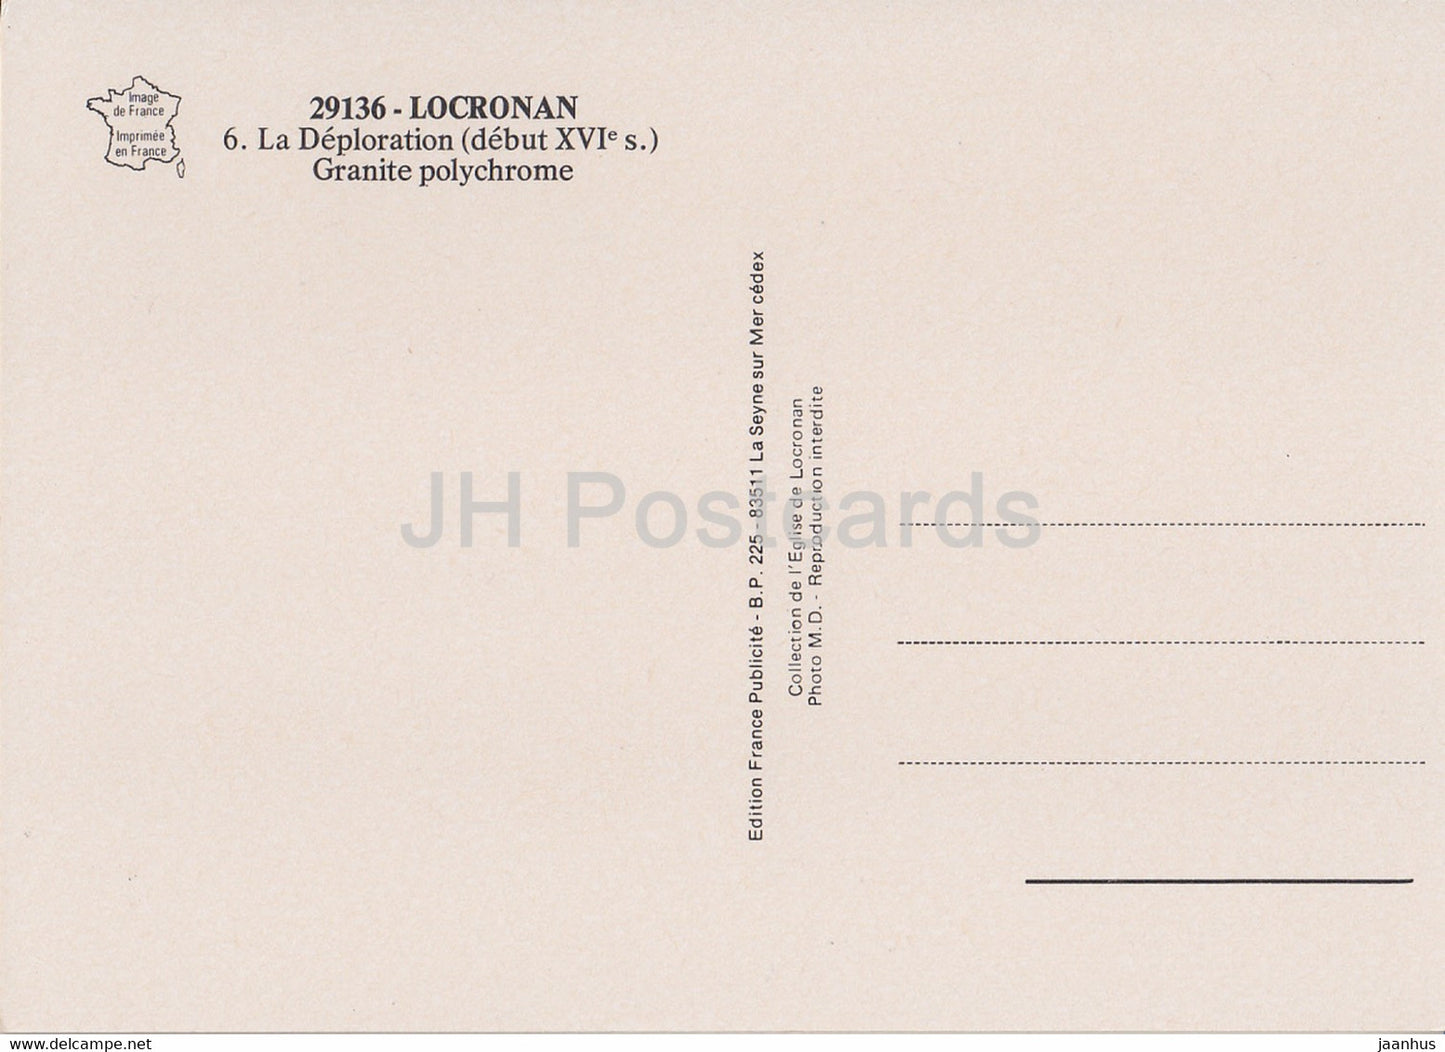 Locronan - La Deploration - Granite Polychrome - 29136 - France - unused